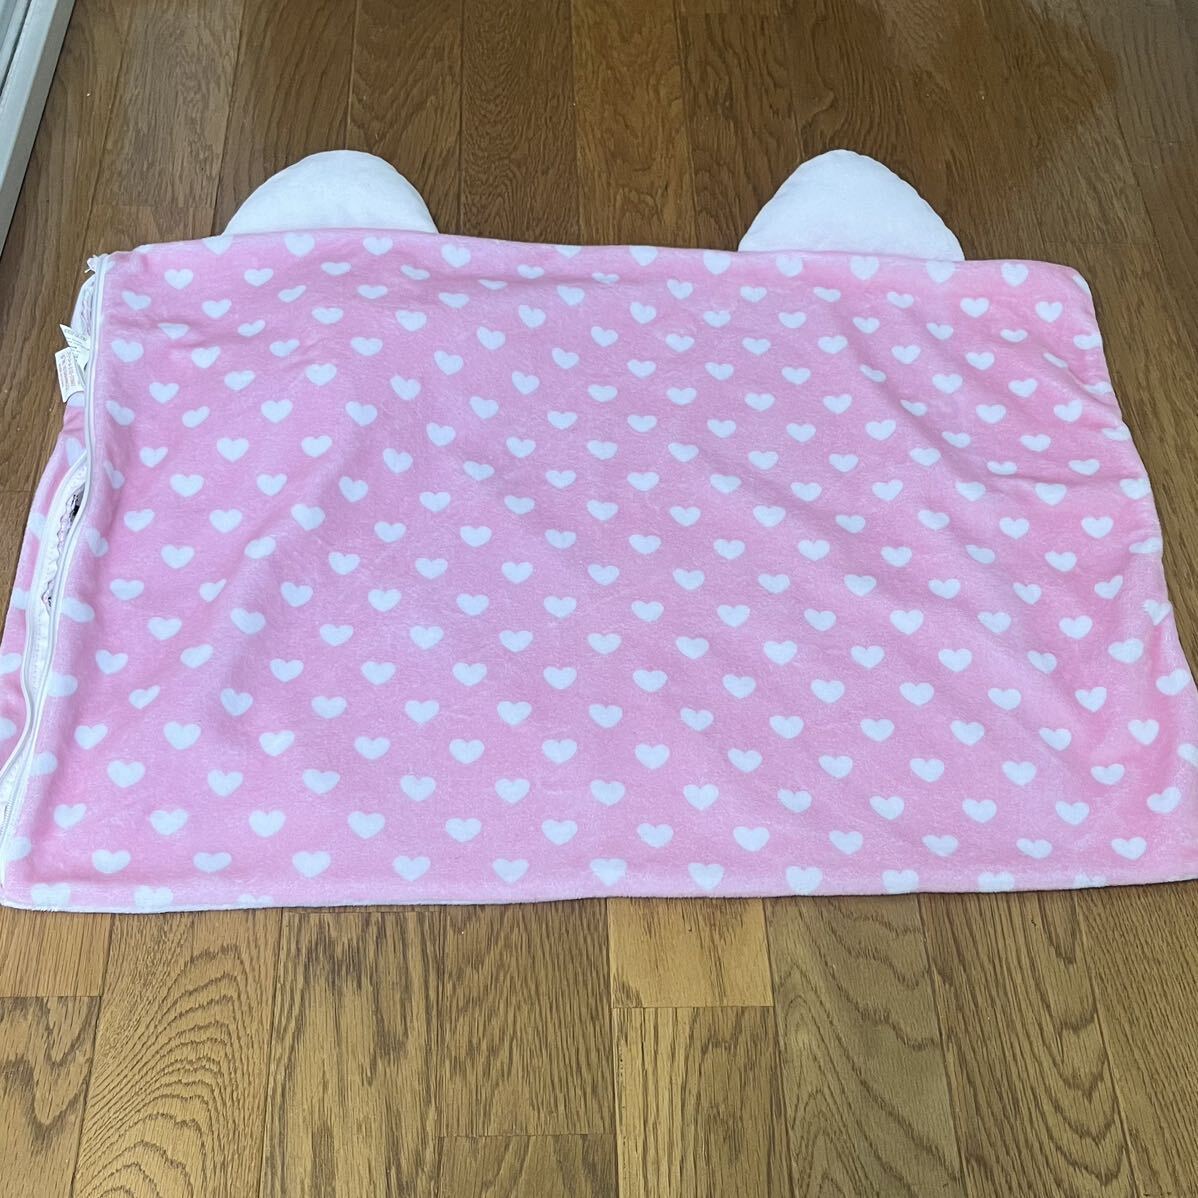  Hello Kitty * подушка покрытие 2 шт. комплект *60cm×40cm Kitty Chan Sanrio ki чай pillow кейс постельные принадлежности прекрасный товар красный розовый HELLO KITTY